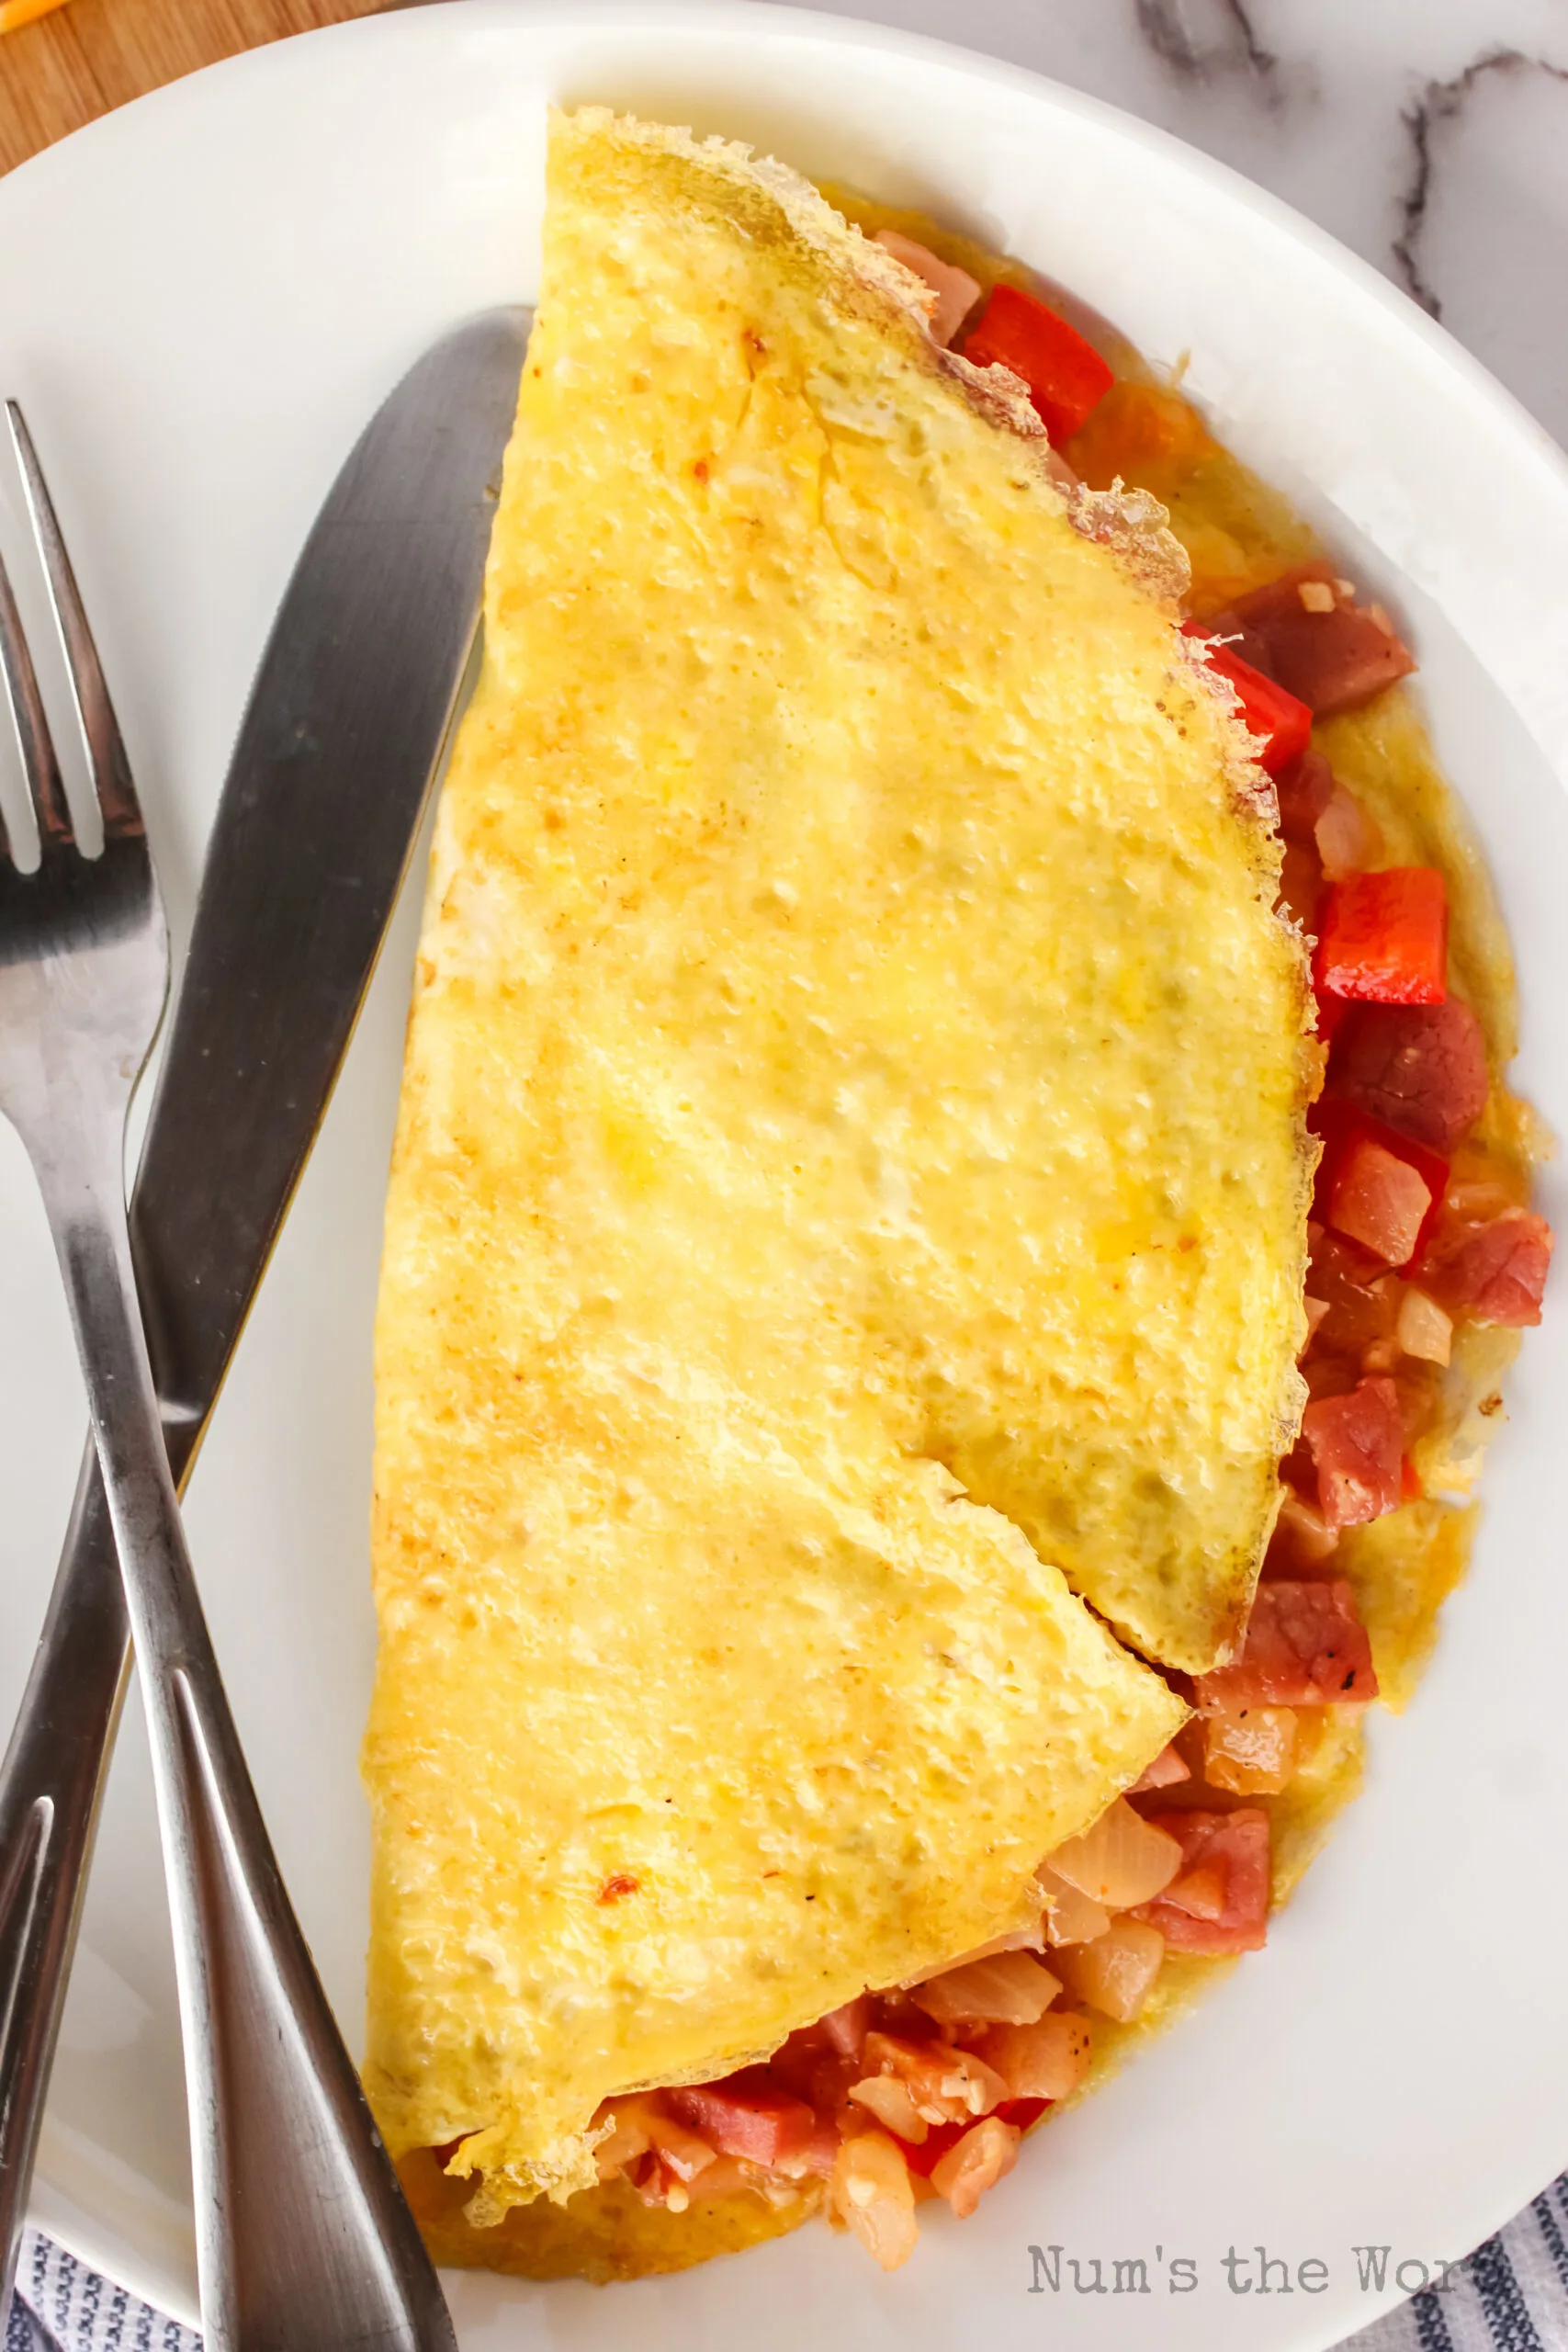 zoomed in image of denver omelette on a plate